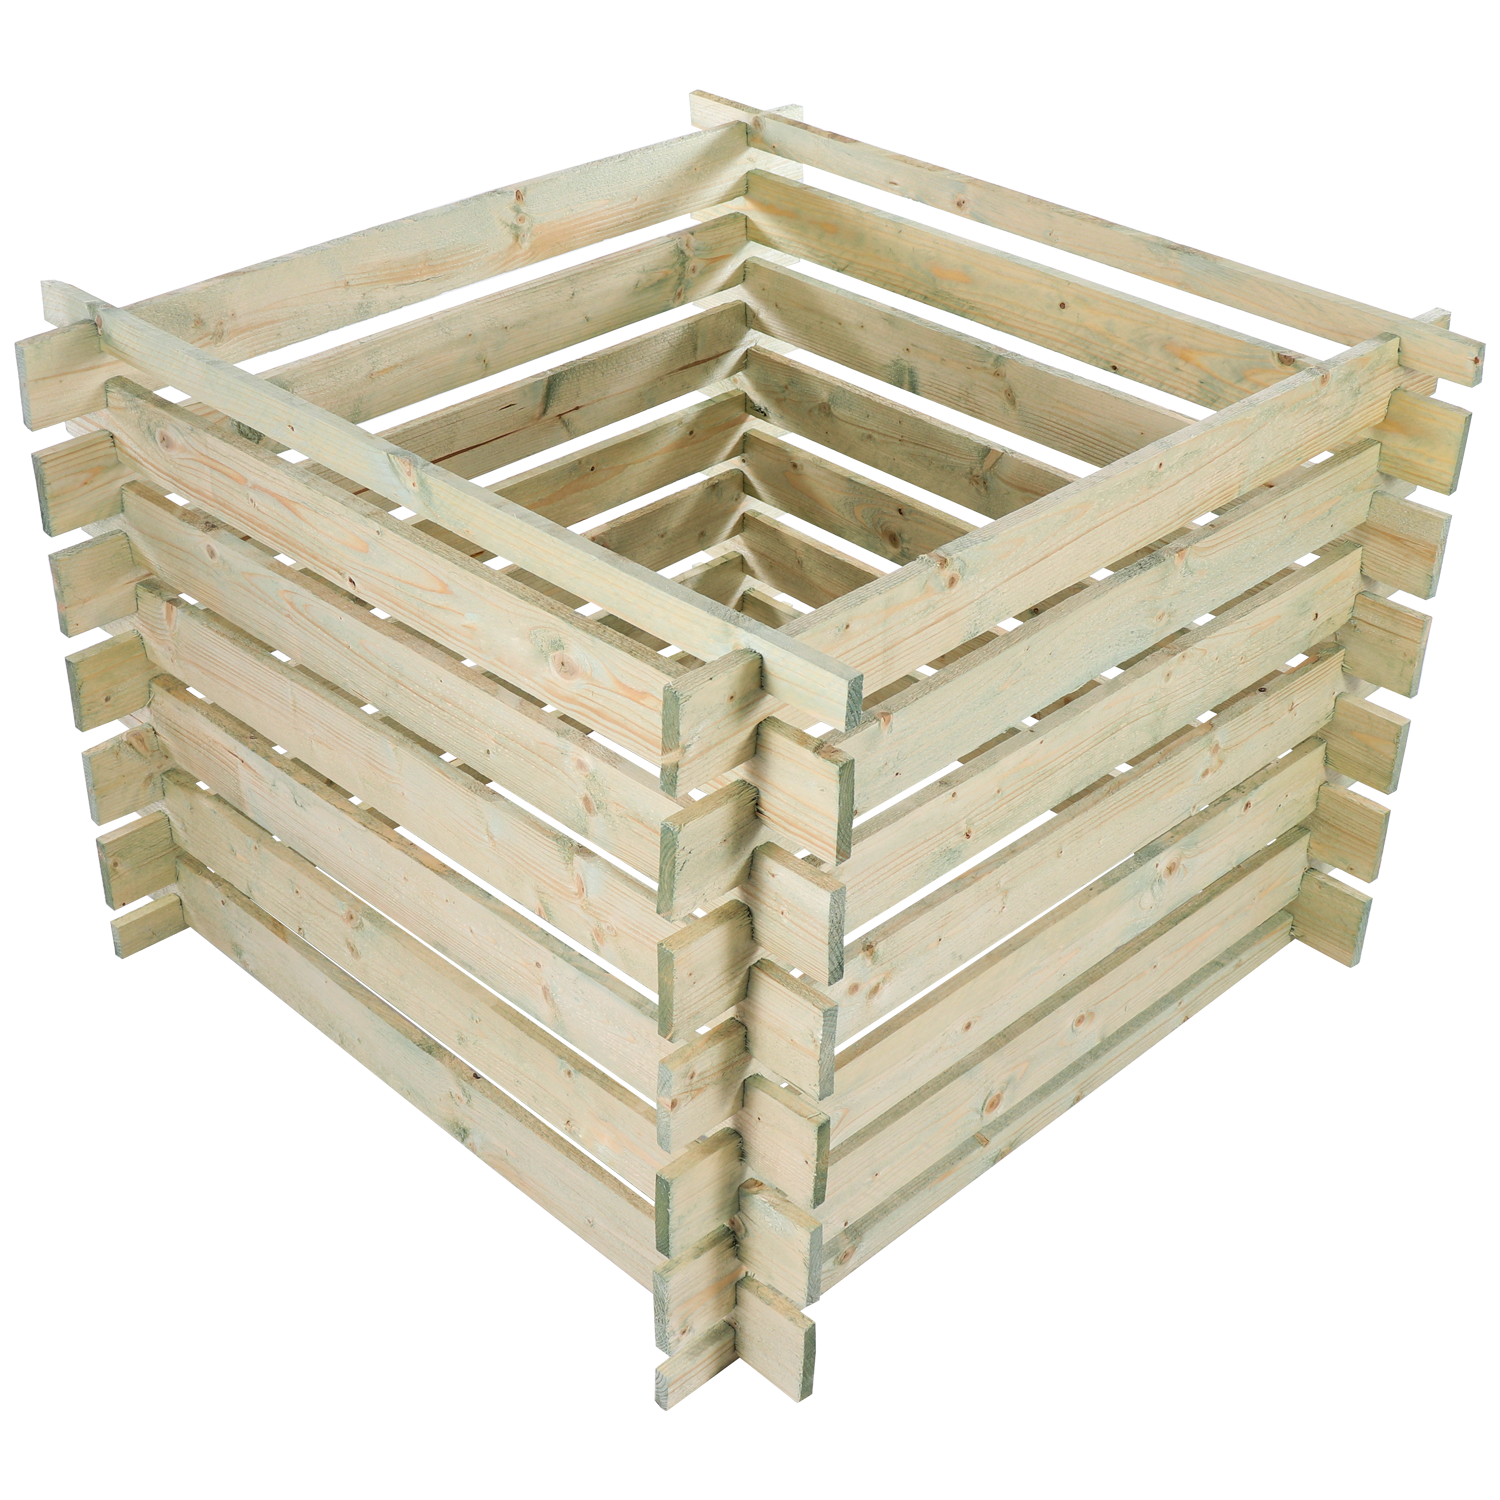 P24® Komposter aus Holz 100x100x70cm, 480l Fassungsvermögen, Stecksystem